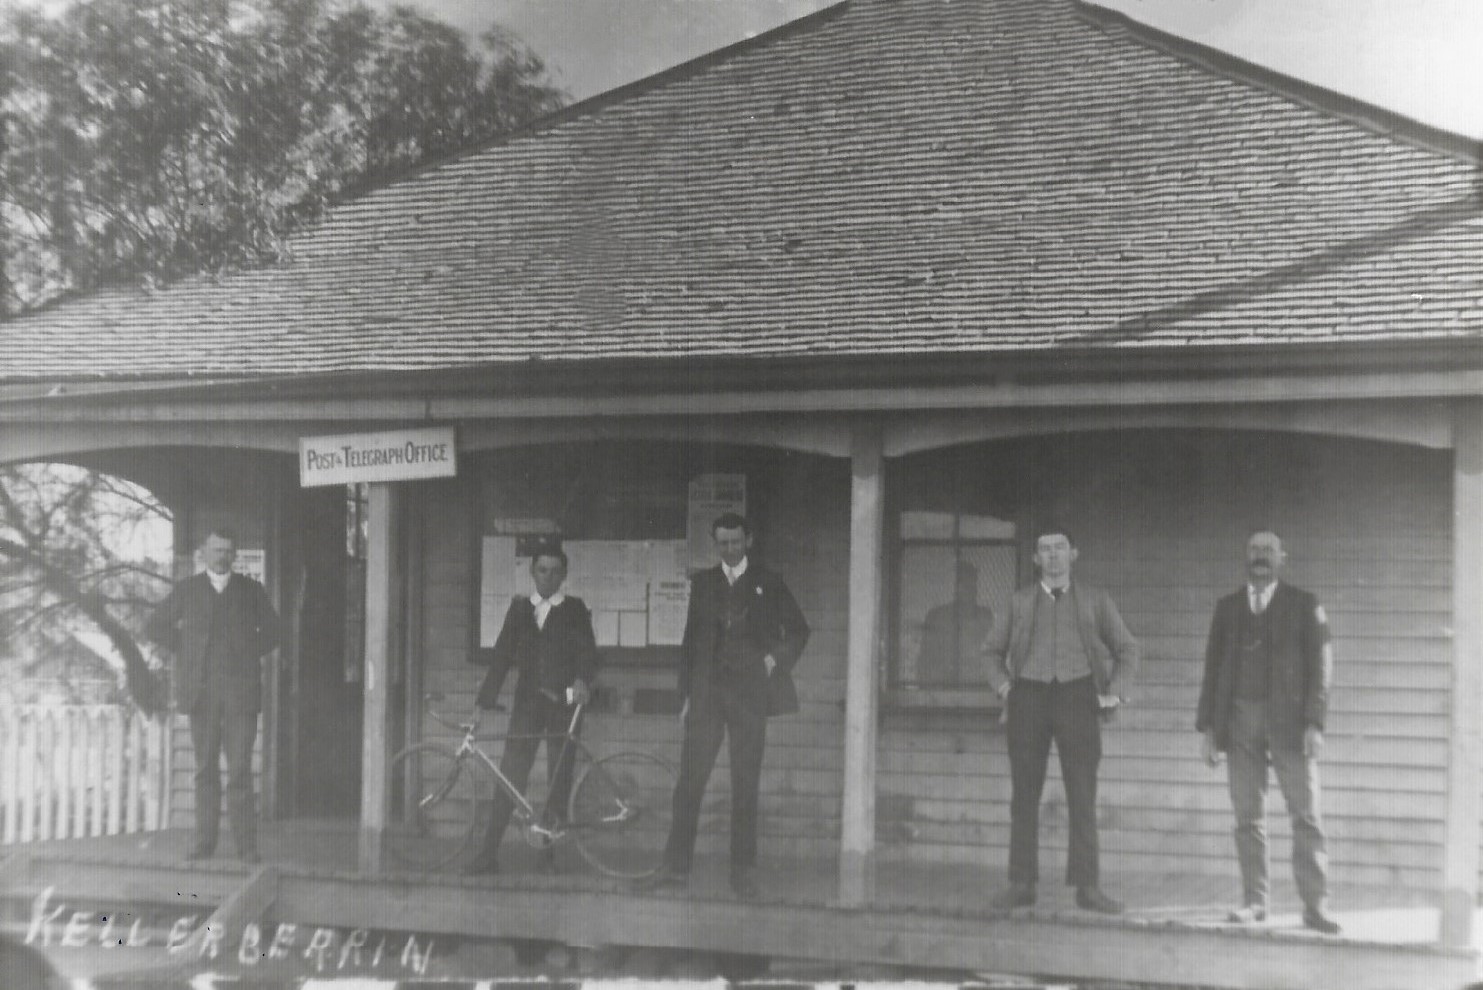 First Kellerberrin Post Office